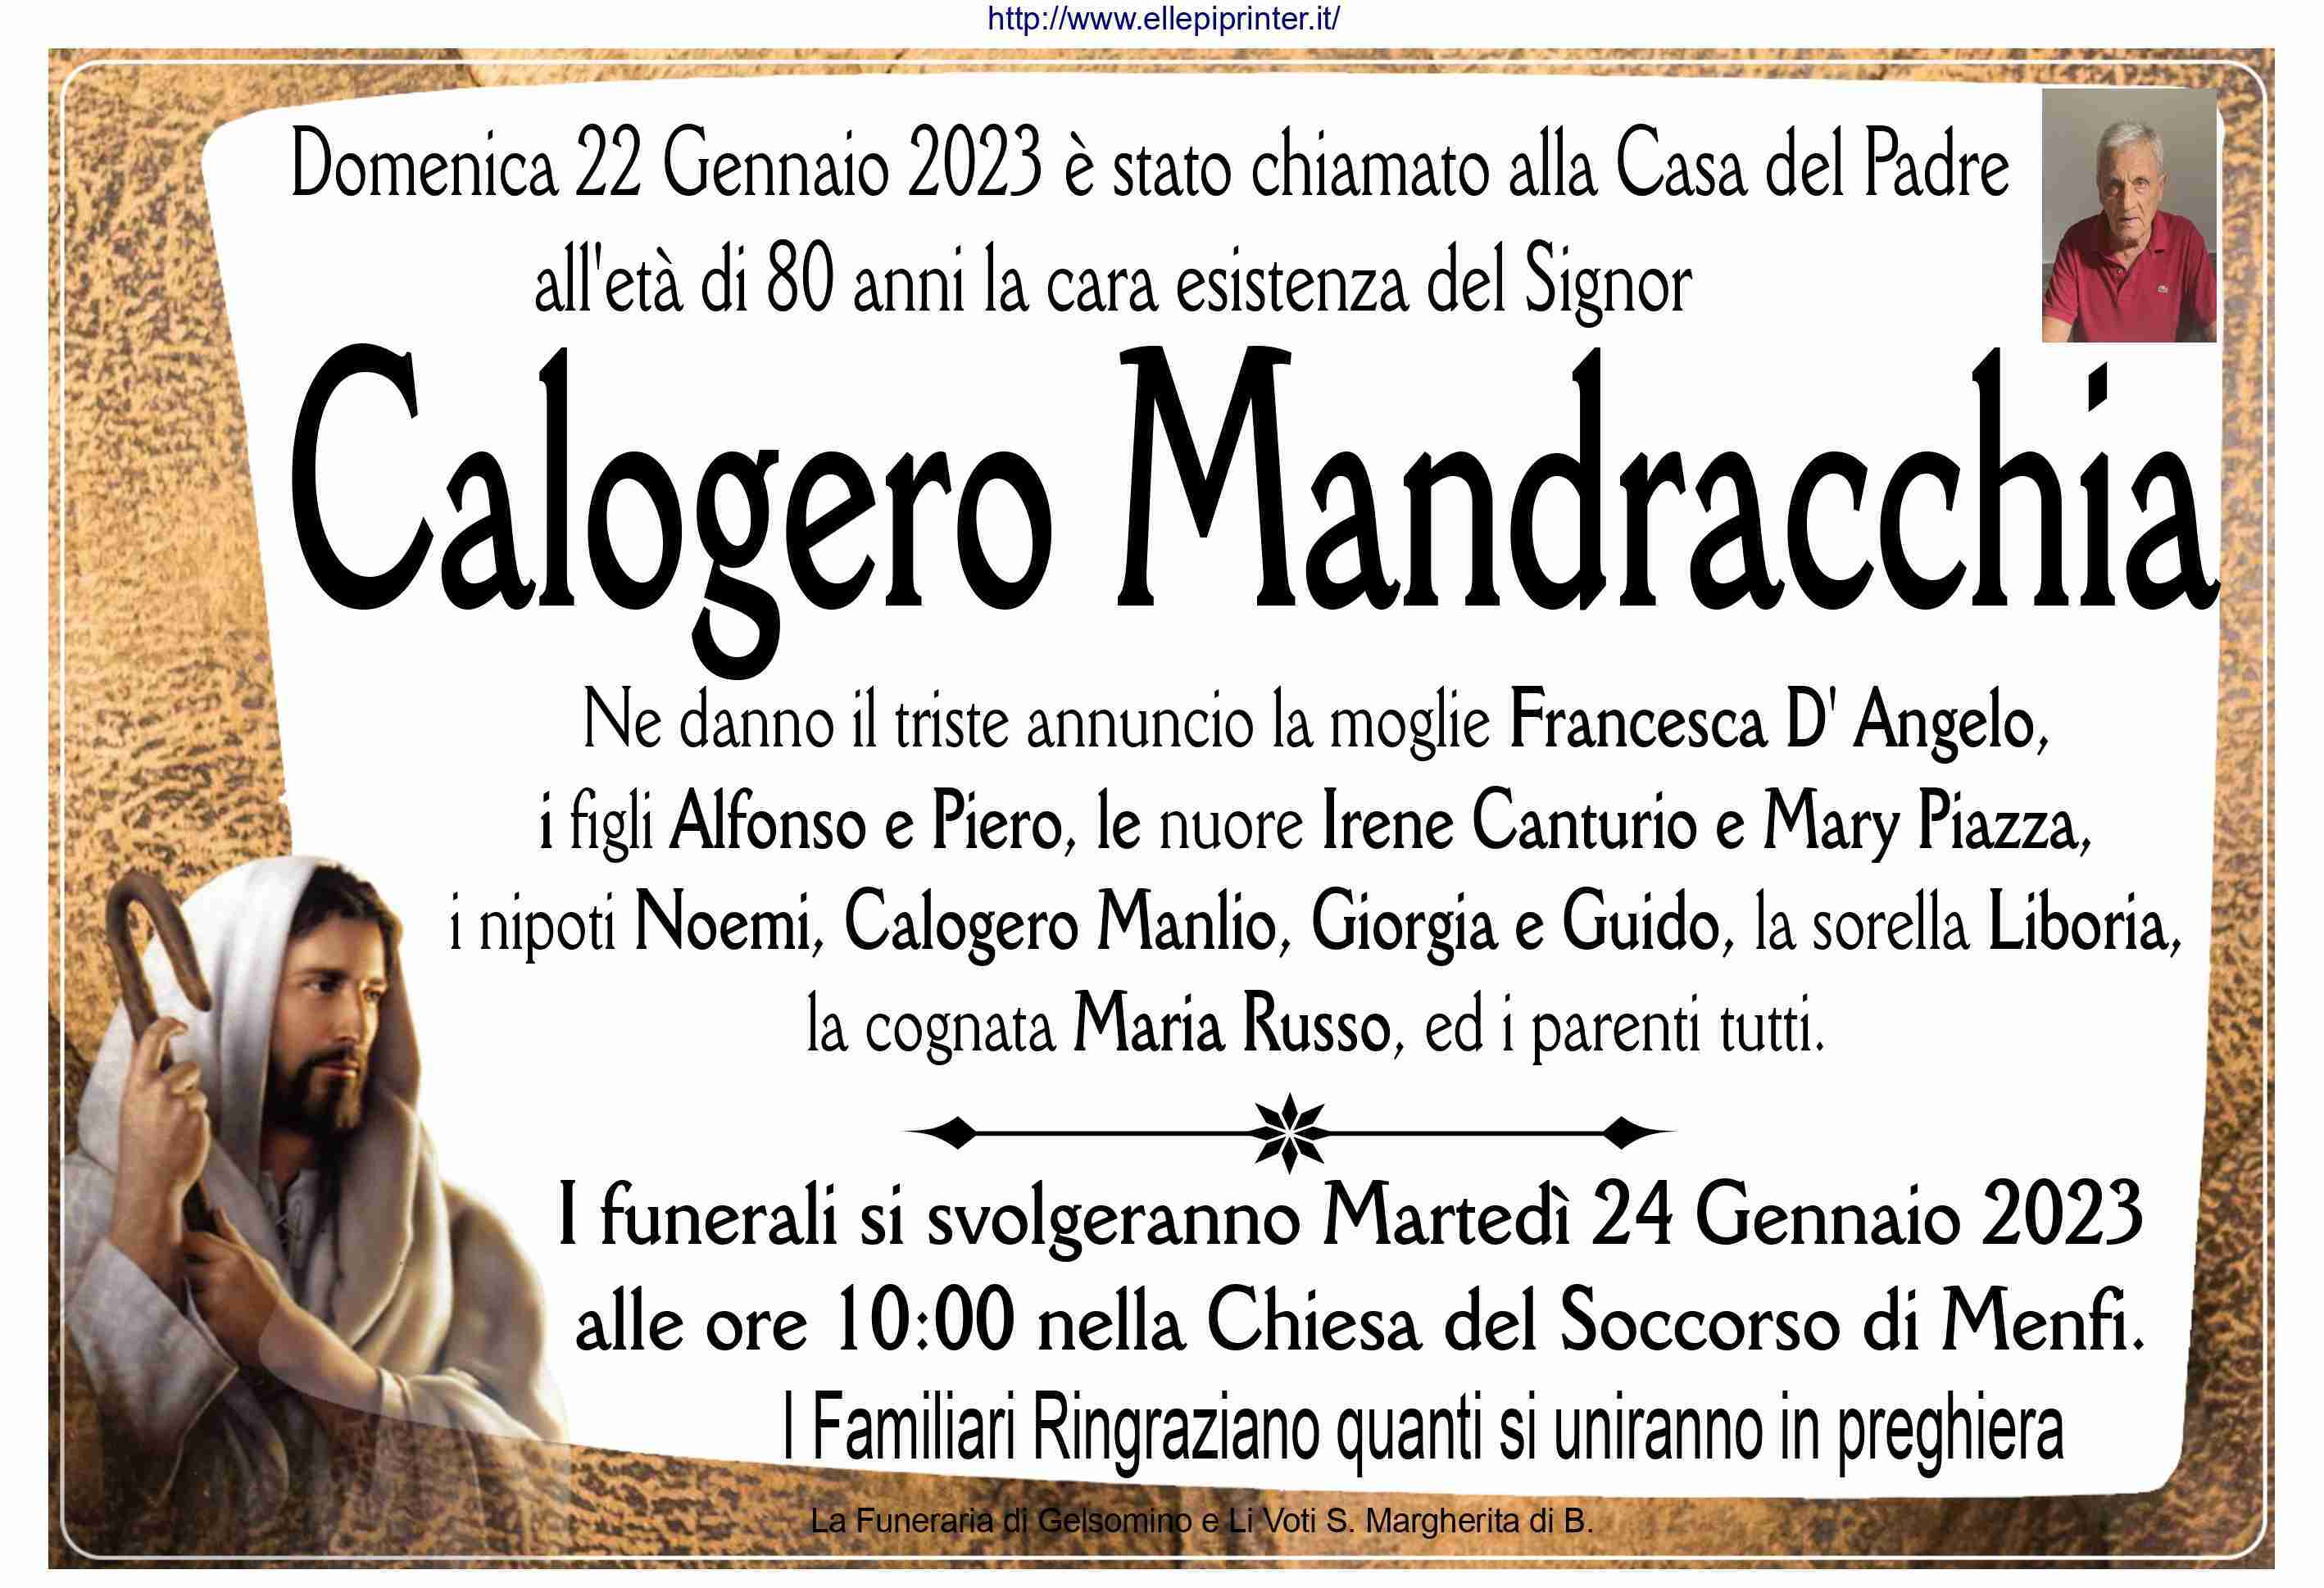 Calogero Mandracchia